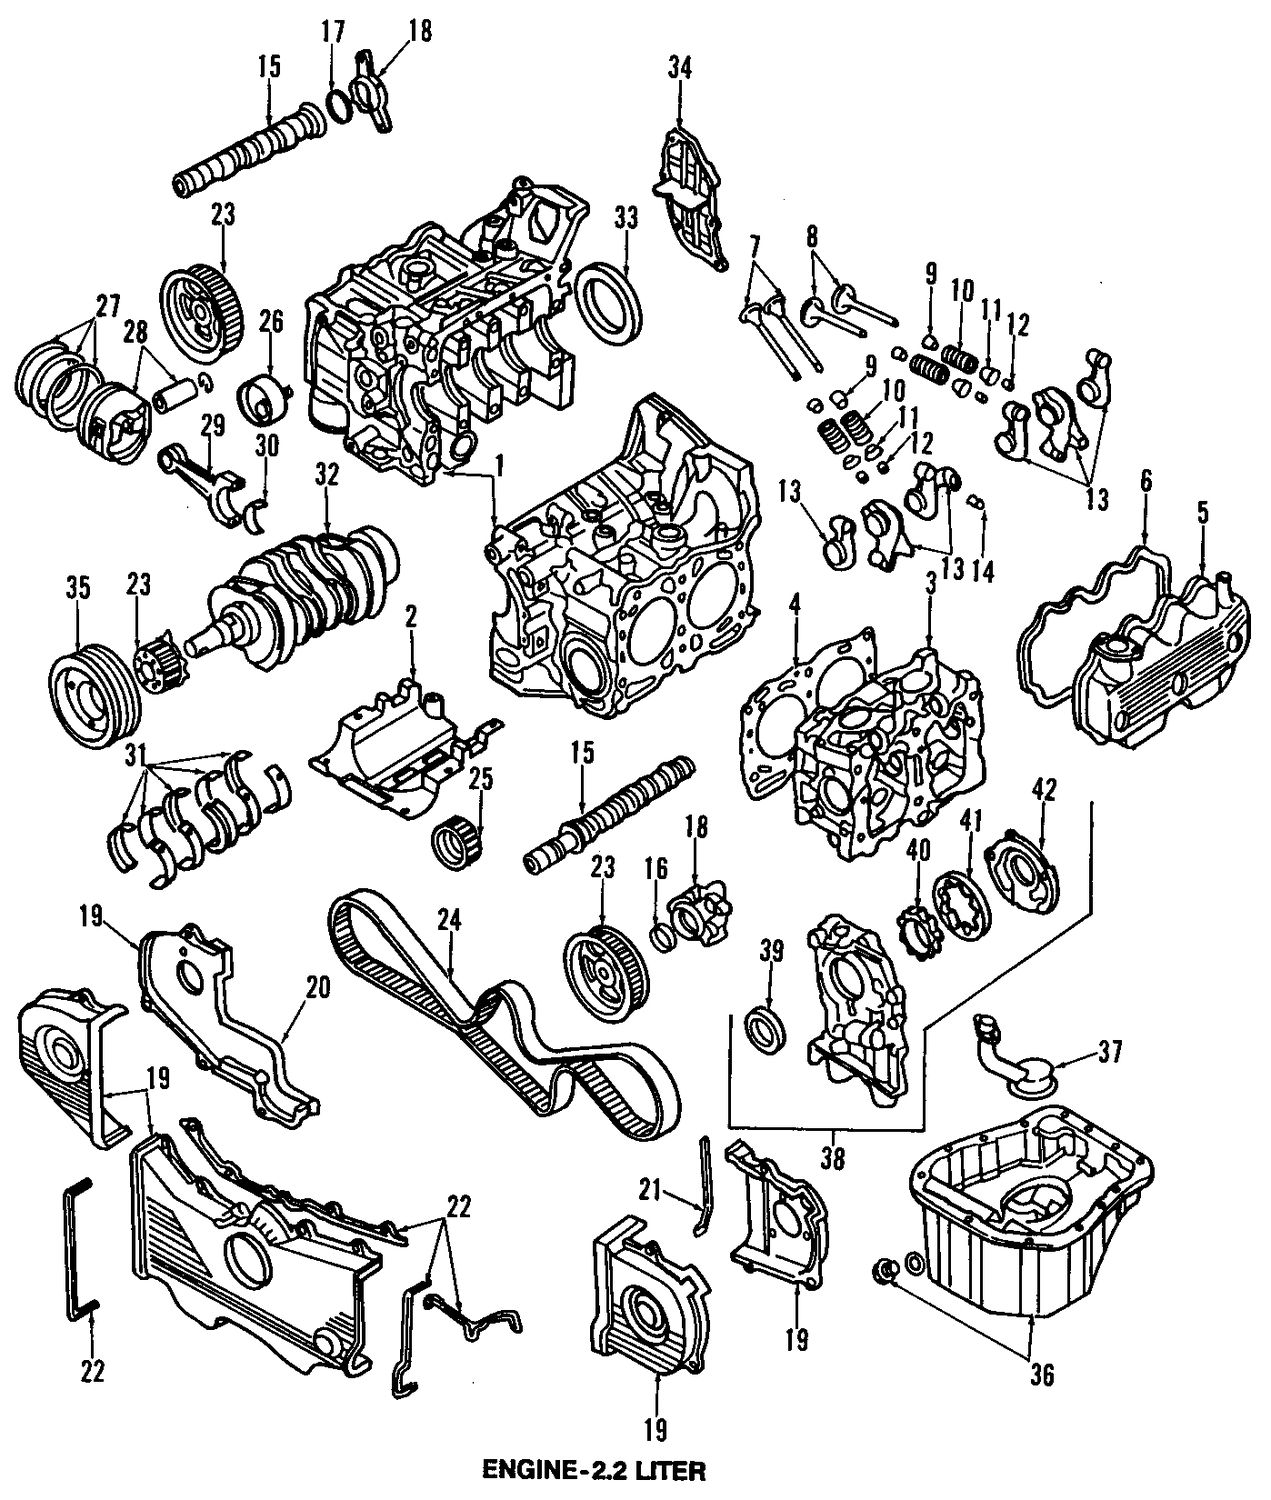 Subaru 2 2 Engine Diagram - Wiring Diagram